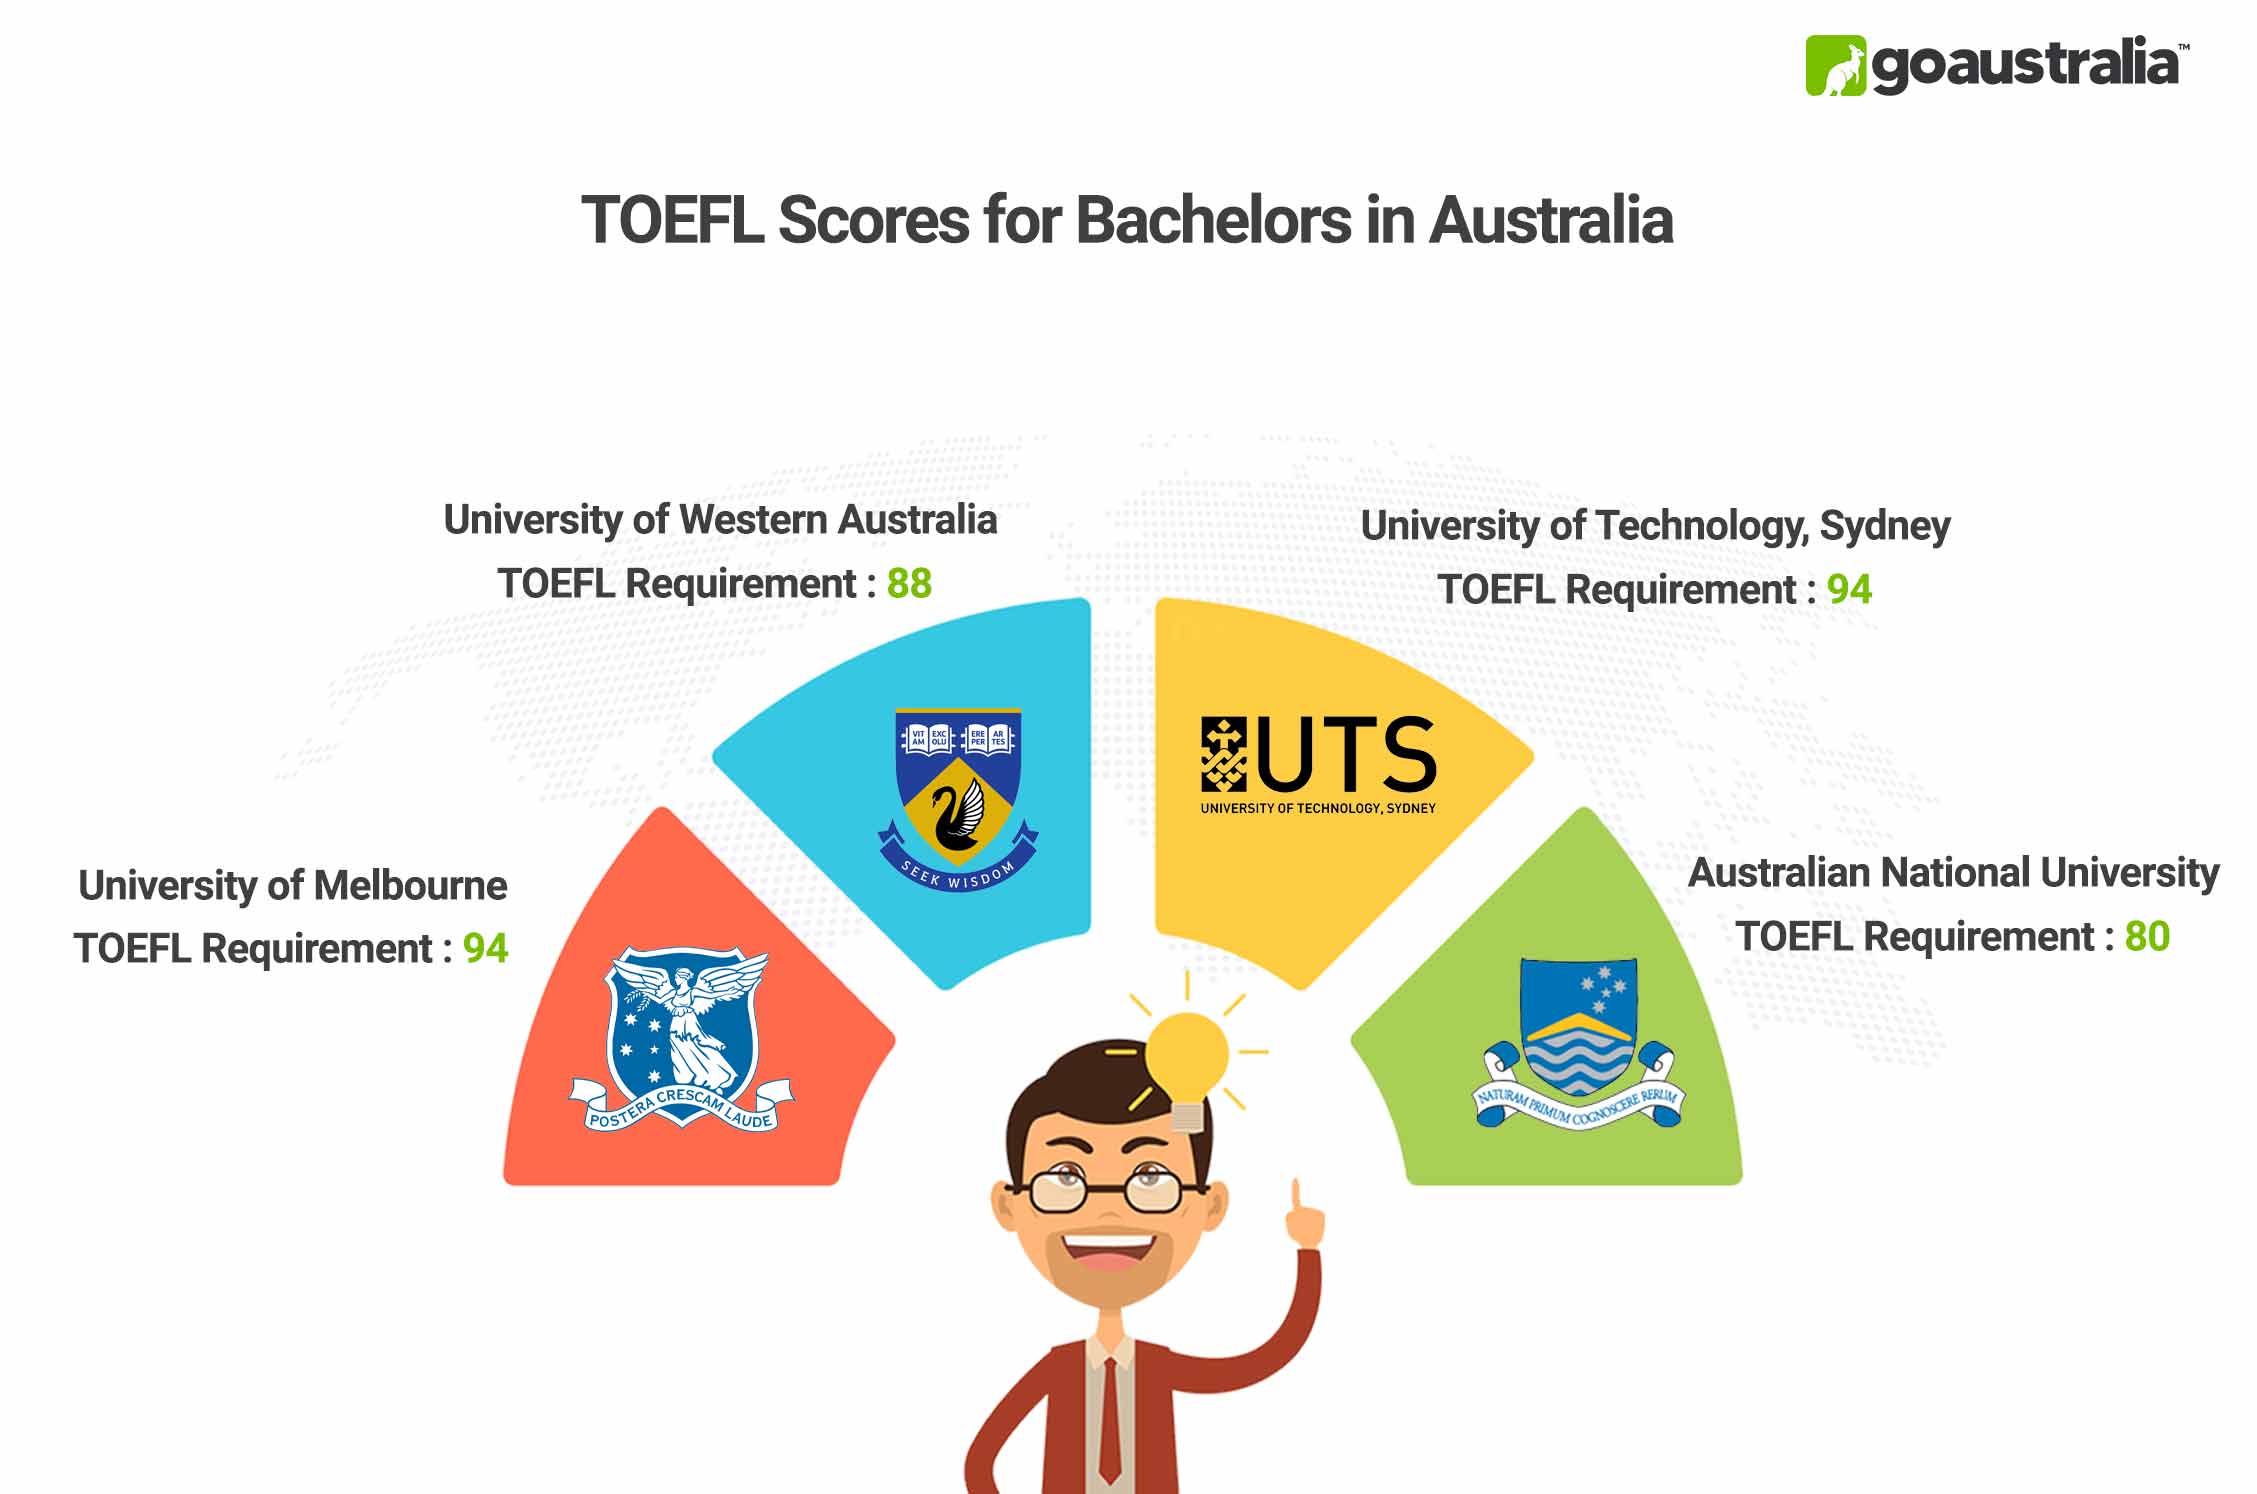 Bachelors in Australia TOEFL Score